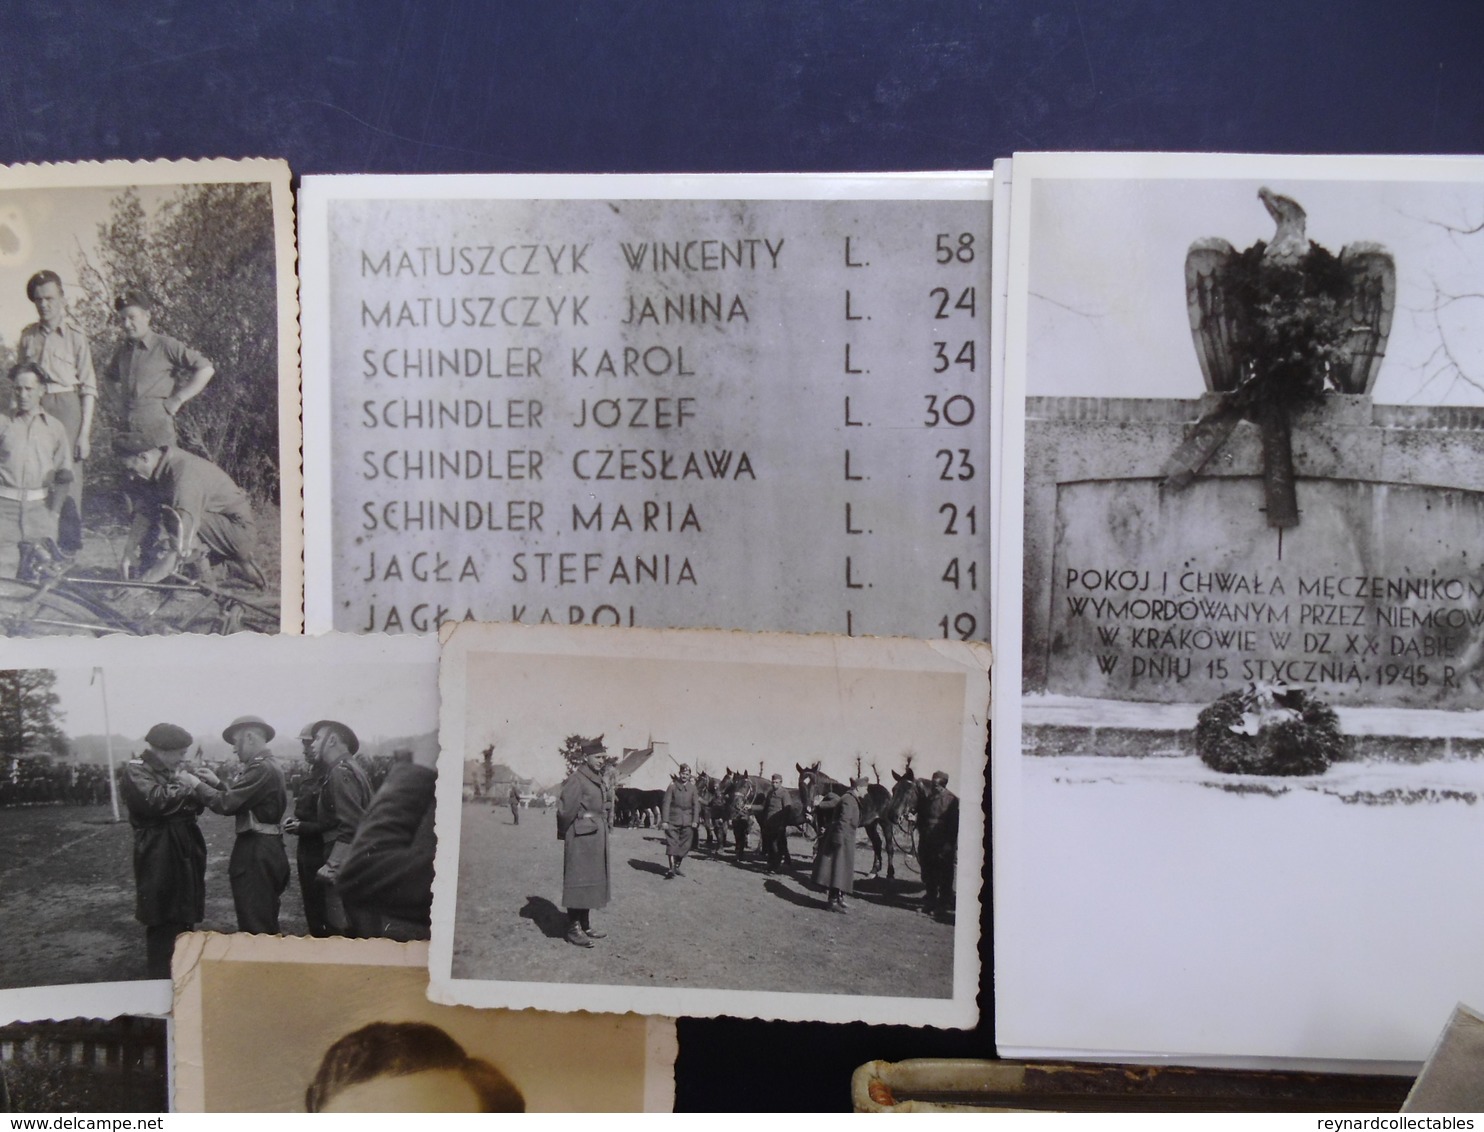 WW2 - postwar photo collection, Polish Forces. Album & loose, inc some Polish Forces Scotland, POW's, Personal.